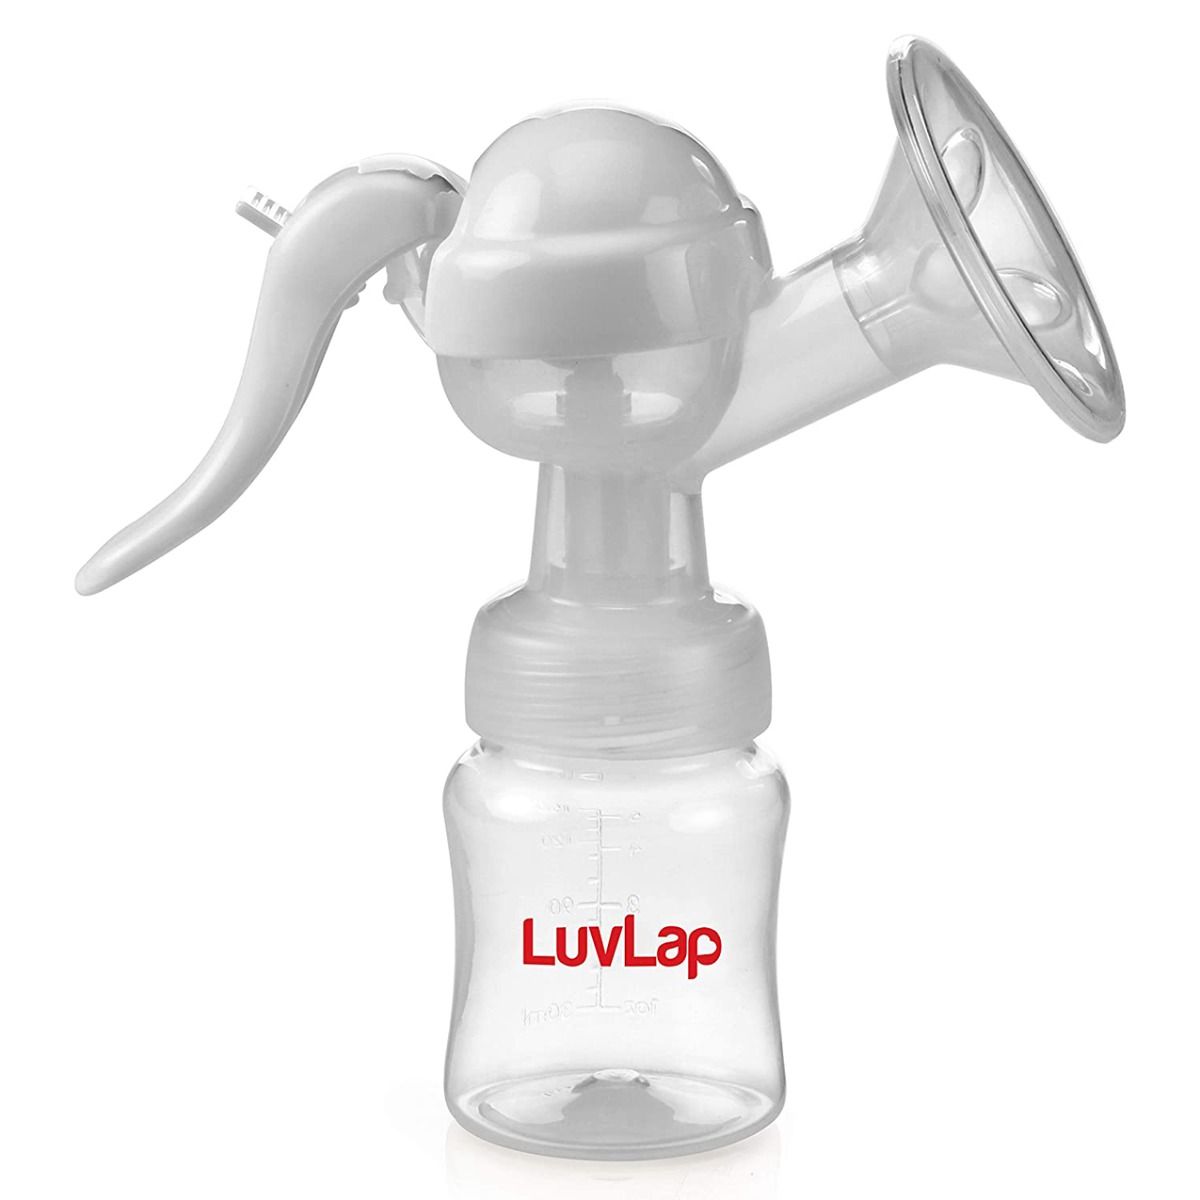 Buy LuvLap Manual Breast Pump, 1 Count Online